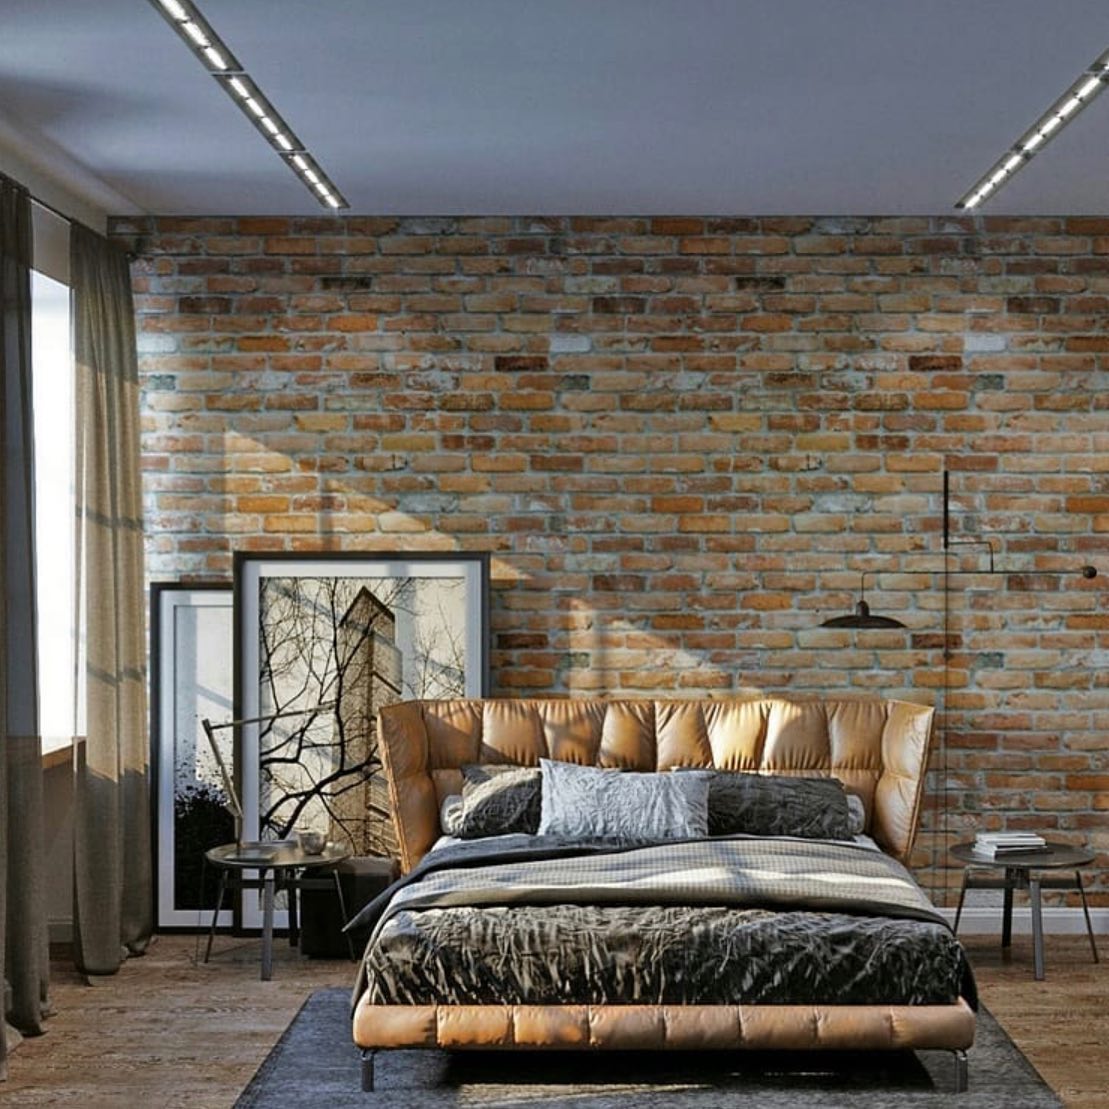 Sleek and Chic: 10 Modern Industrial Bedroom Decor Ideas